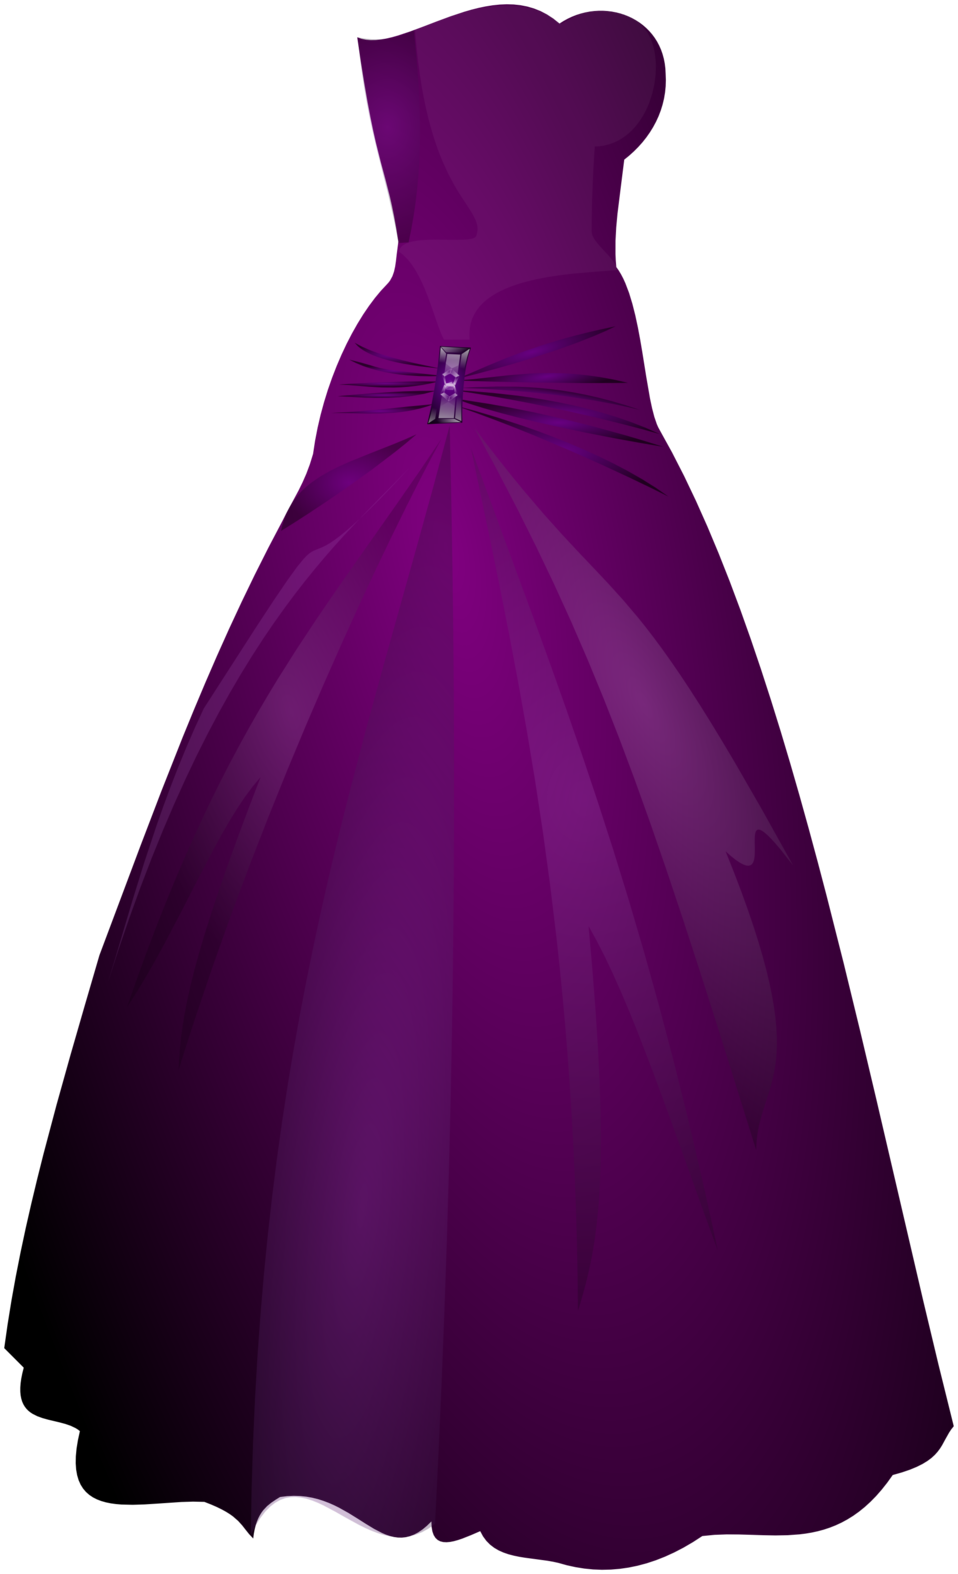 Violet dress clipart